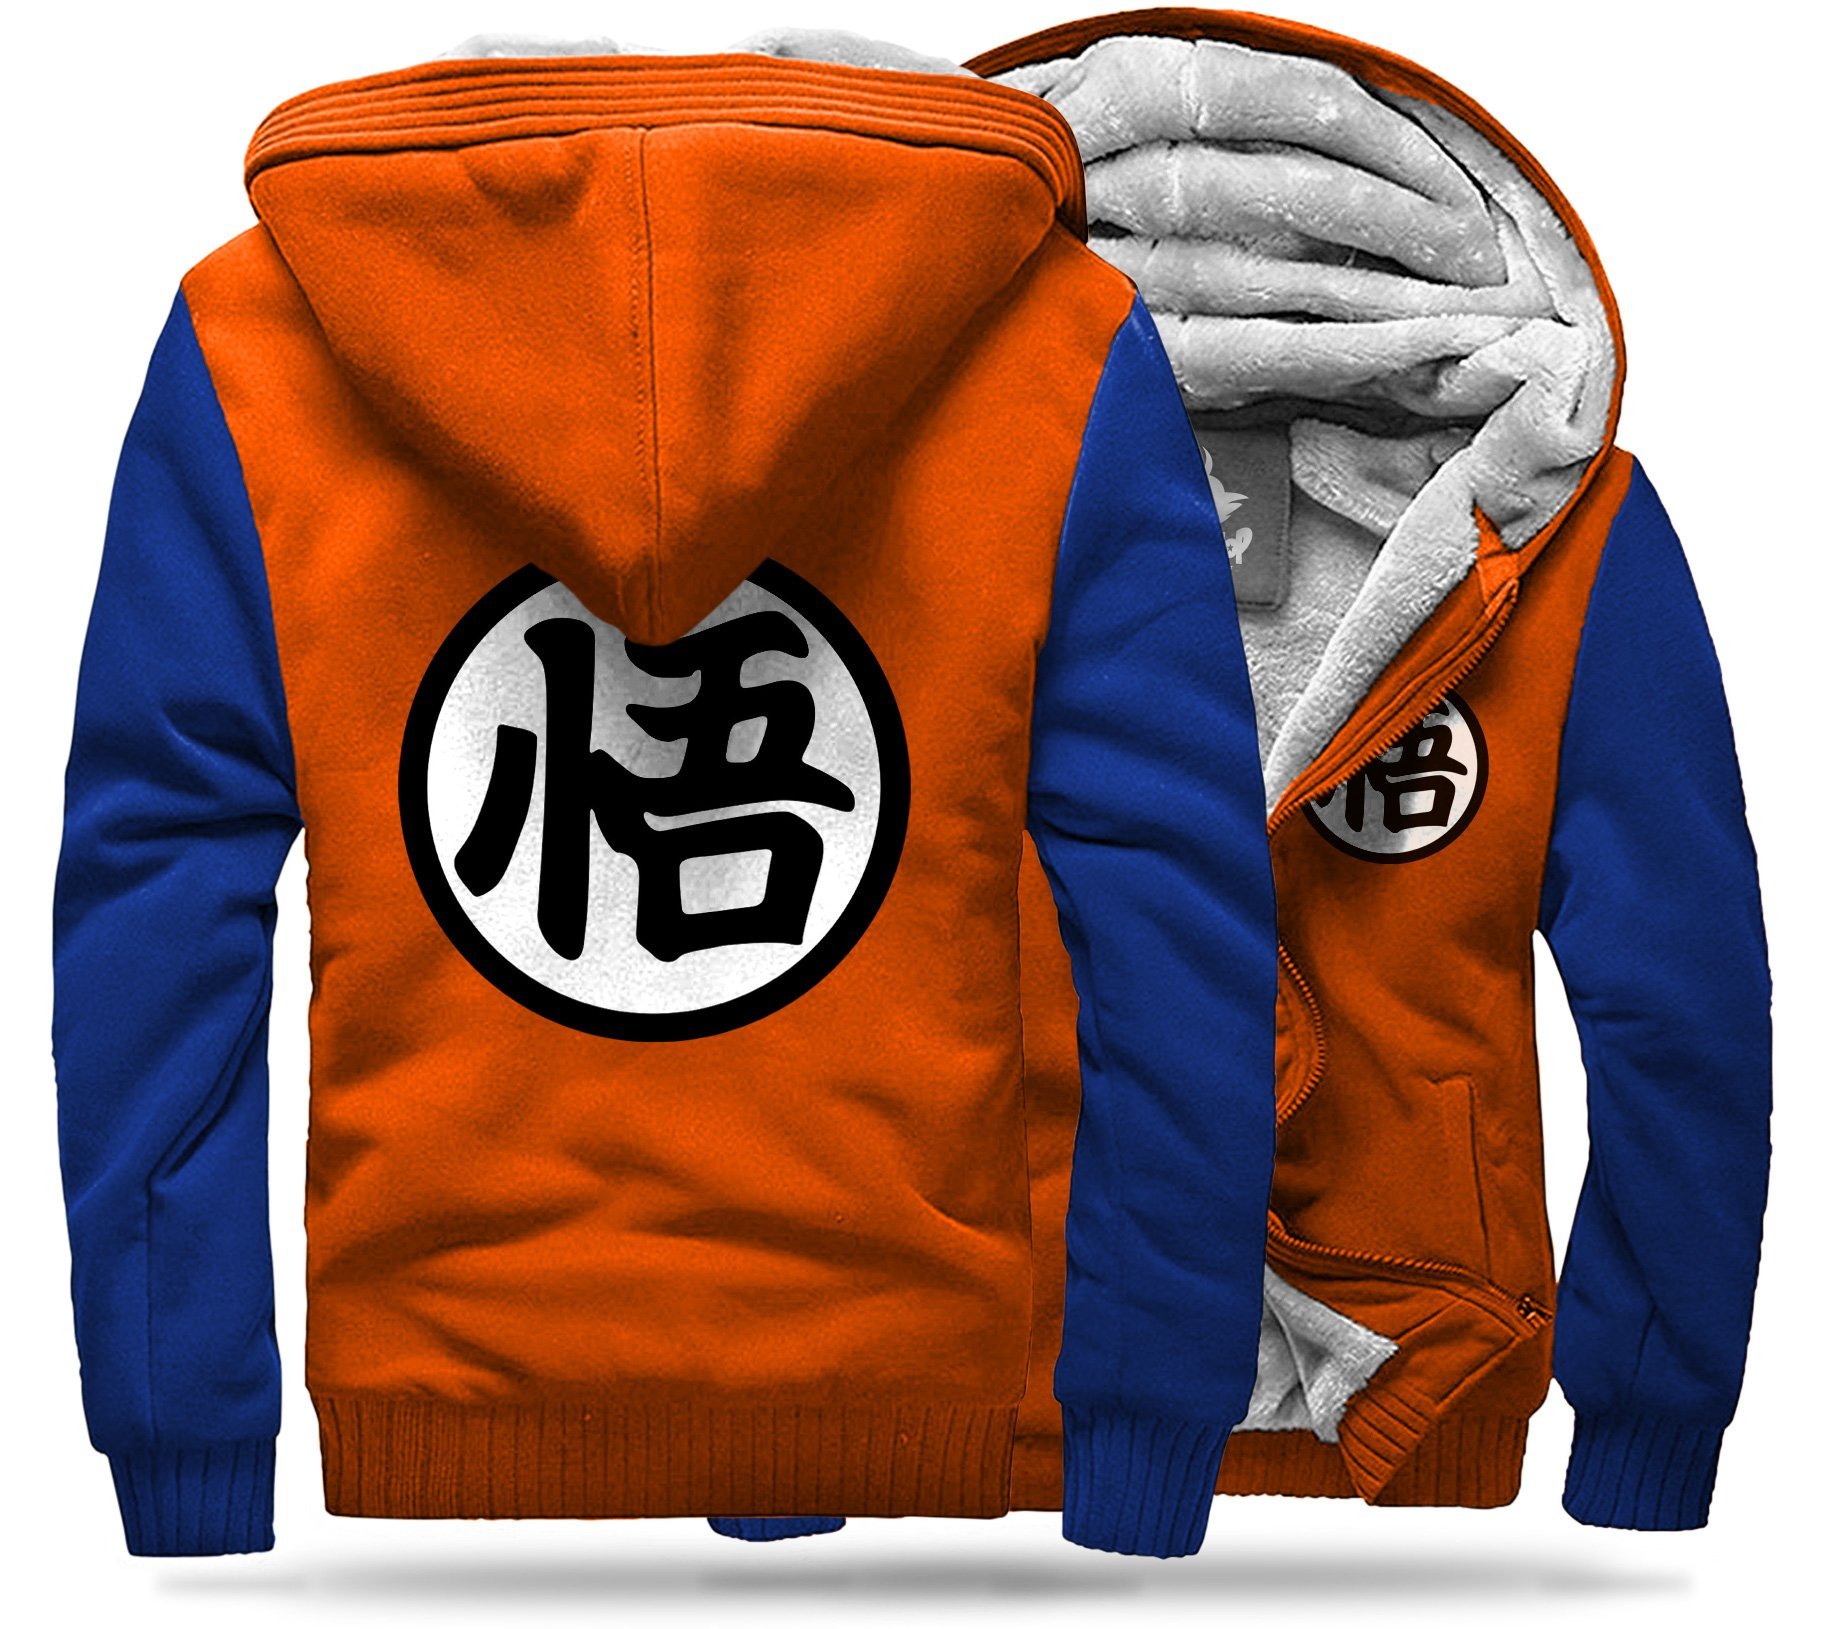 DBZ Fleece Jacket Kanji "Go" (Orange & Blue) 1 / S Official Dragon Ball Z Merch